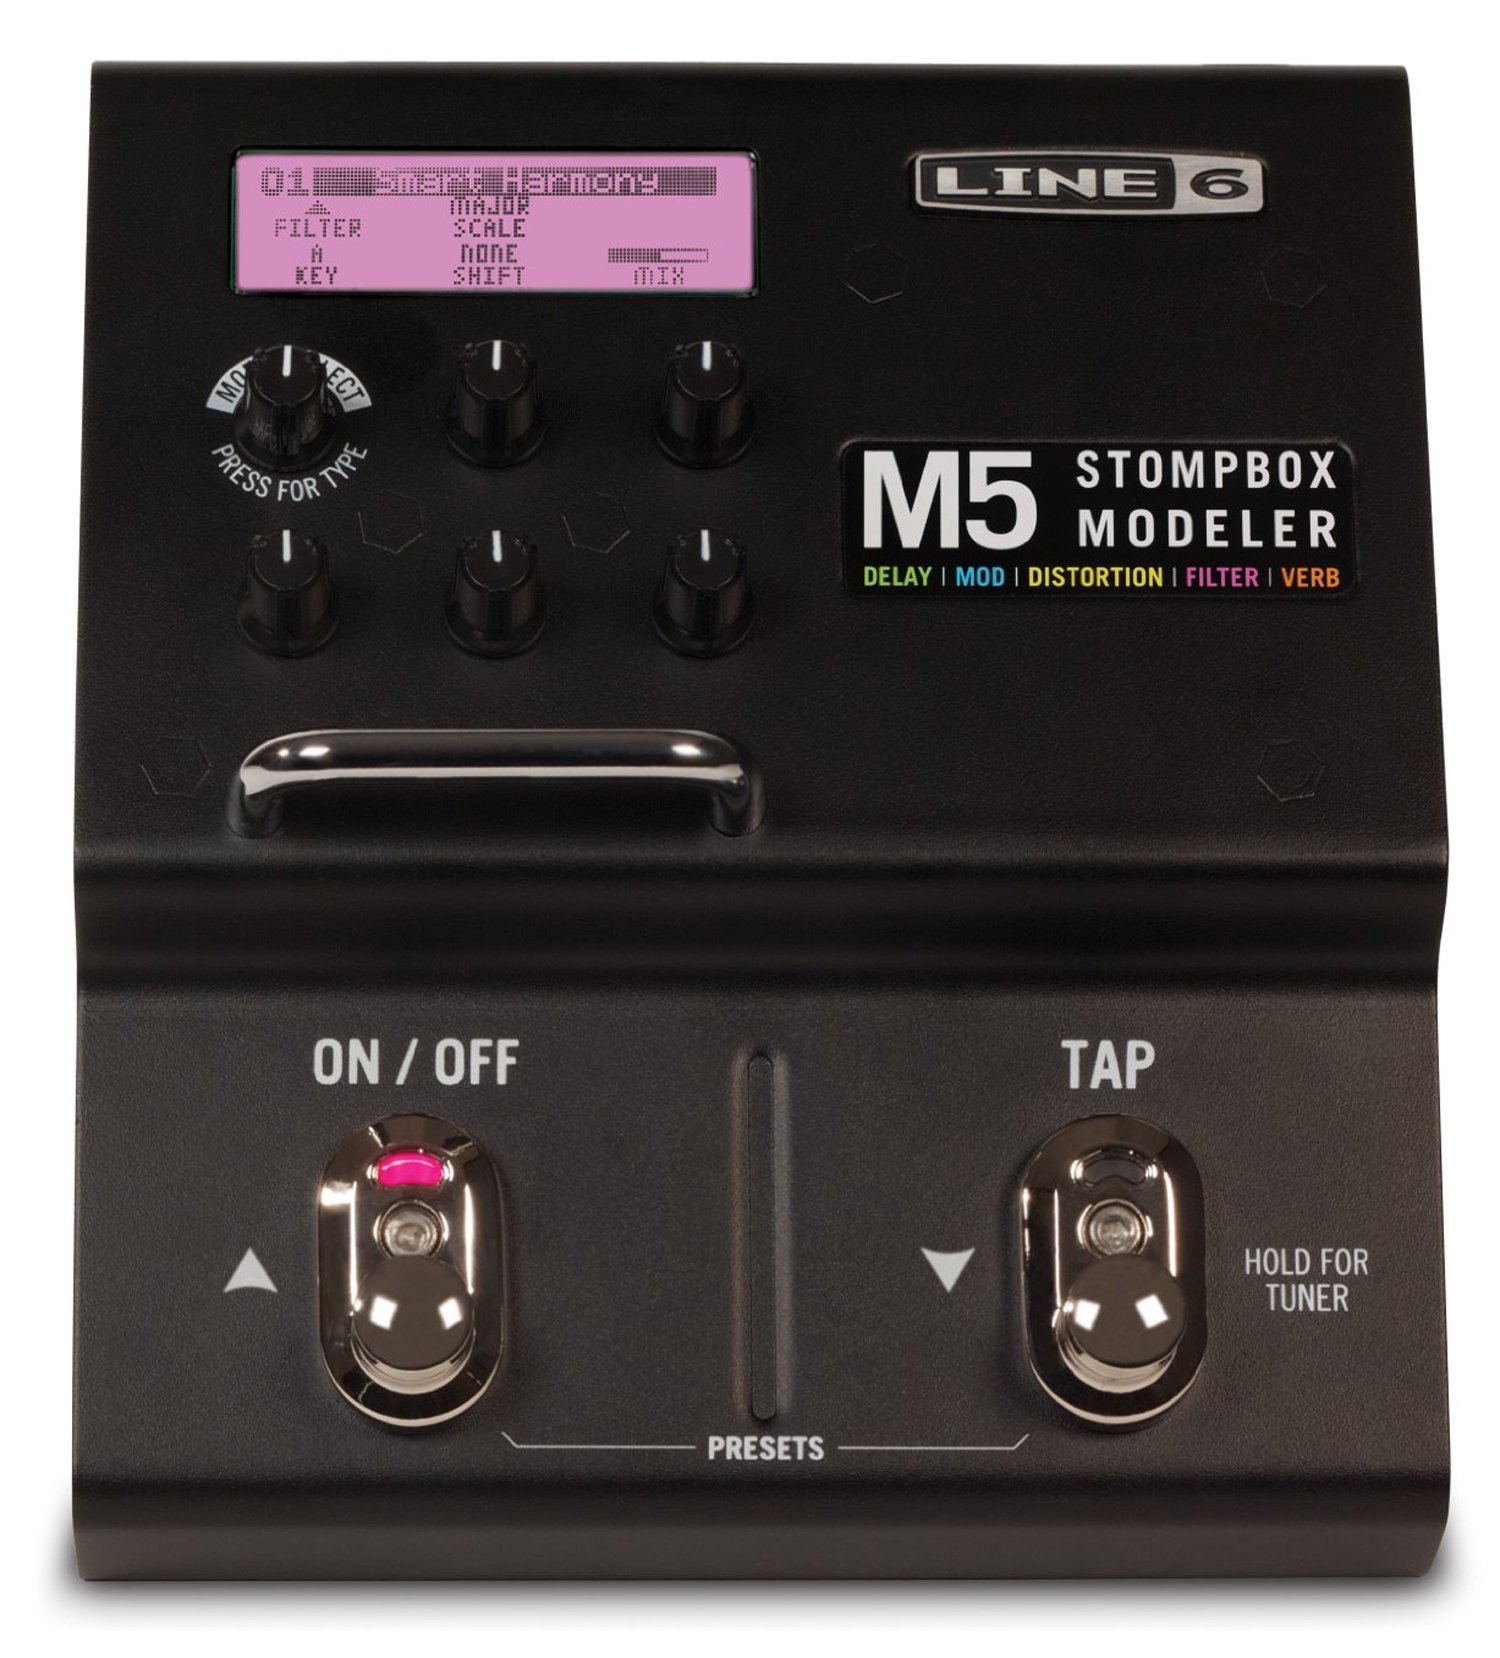 Line 6 Модельер M5 StompBox